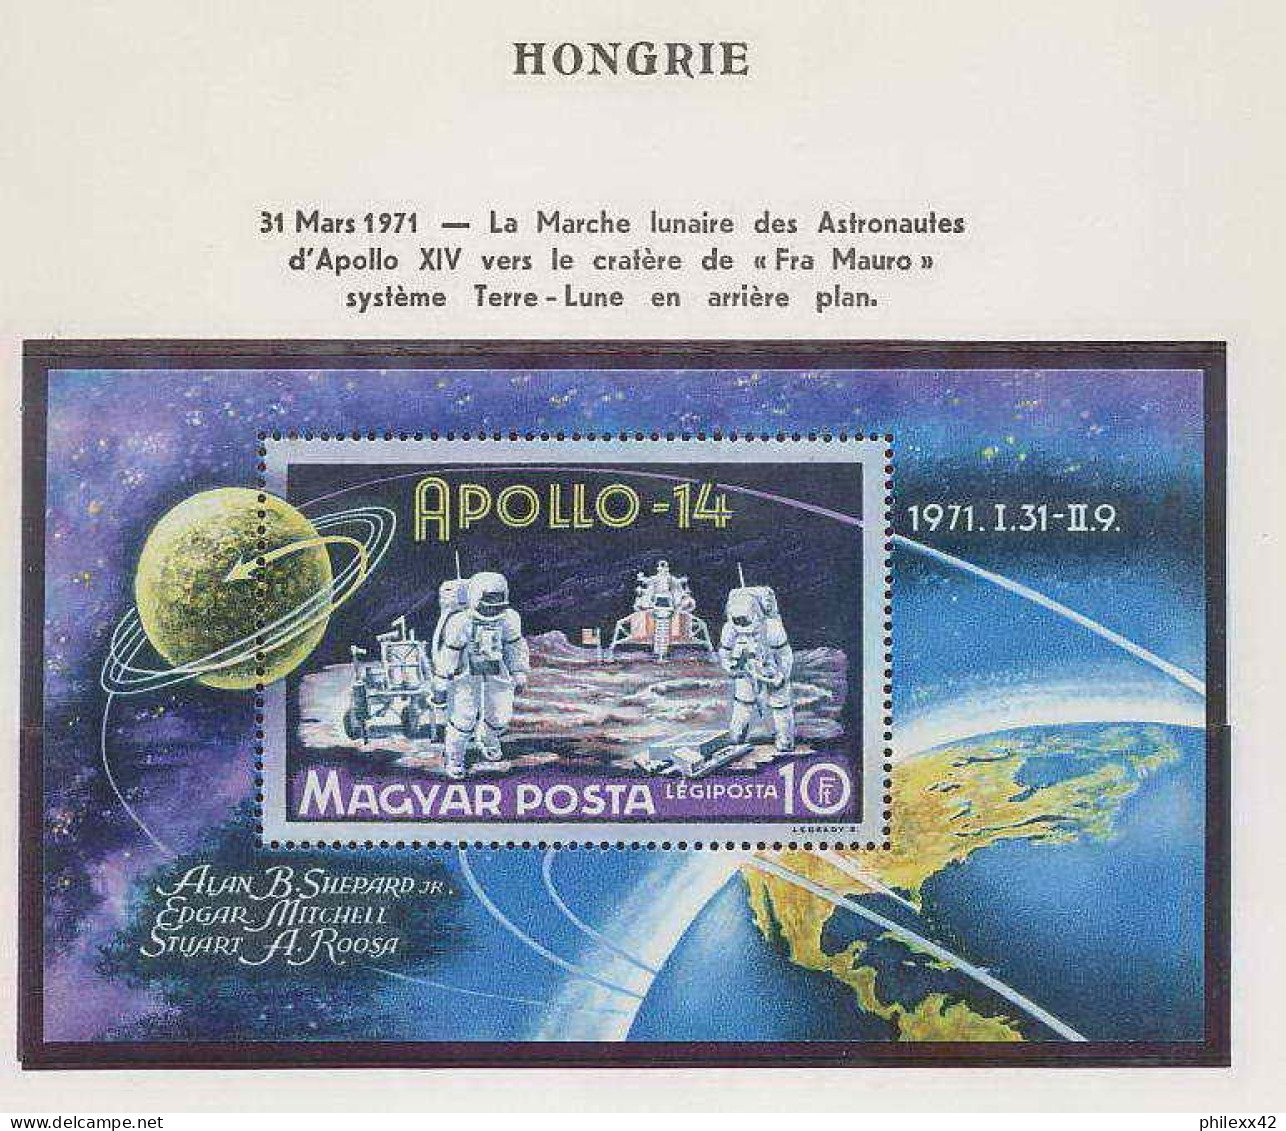 1053/ Espace (space) ** MNH Apollo 14 Hongrie (Hungary) Bloc 85 - Europa